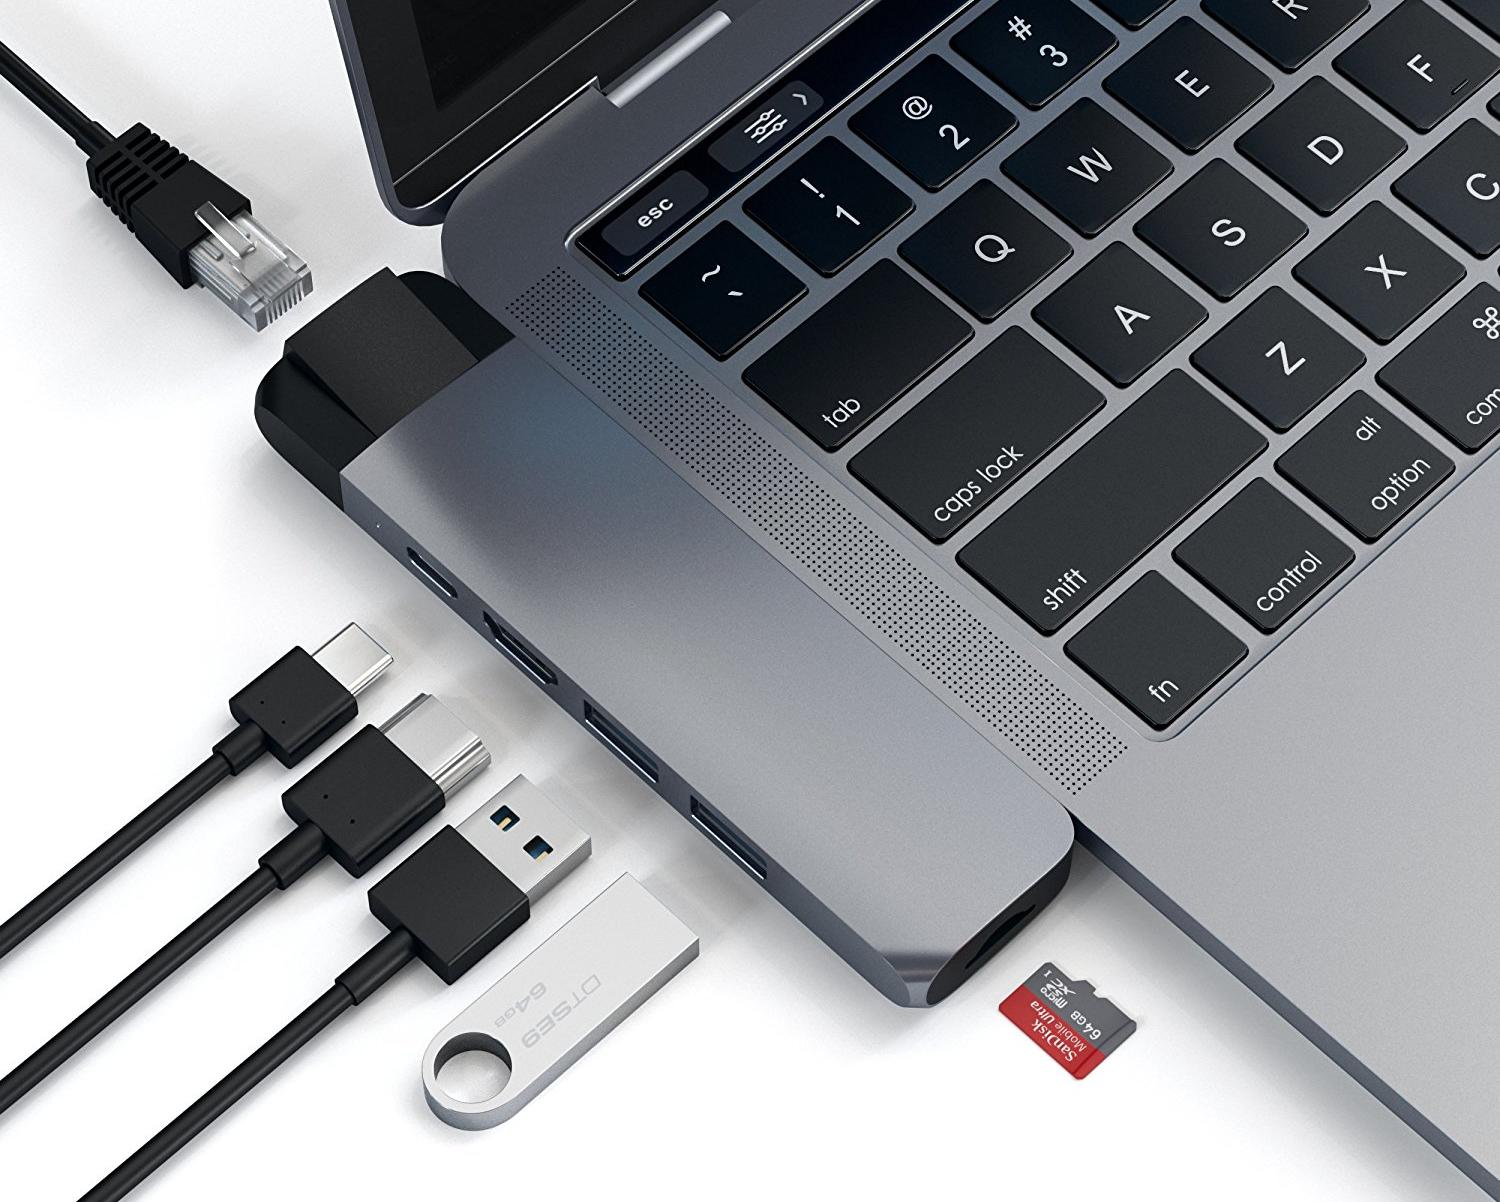 USB-хаб Satechi Aluminium Type-C Pro Hub With Ethernet Space Gray для MacBook Pro 2016/17/18 и MacBook Air 2018